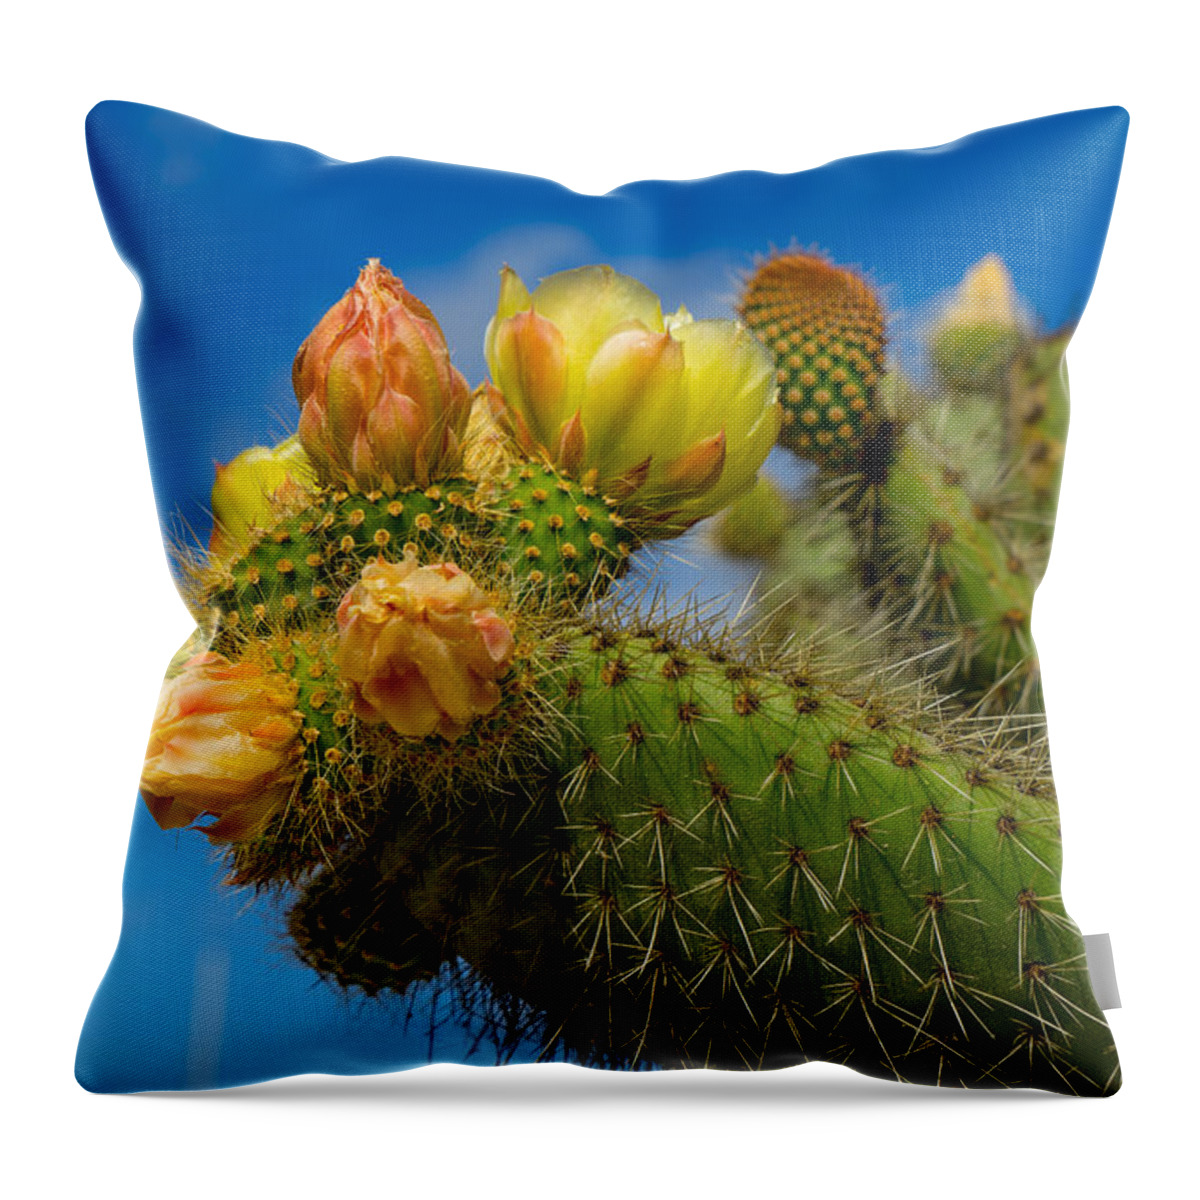 Cactus Throw Pillow featuring the photograph Cactus Blue by Derek Dean